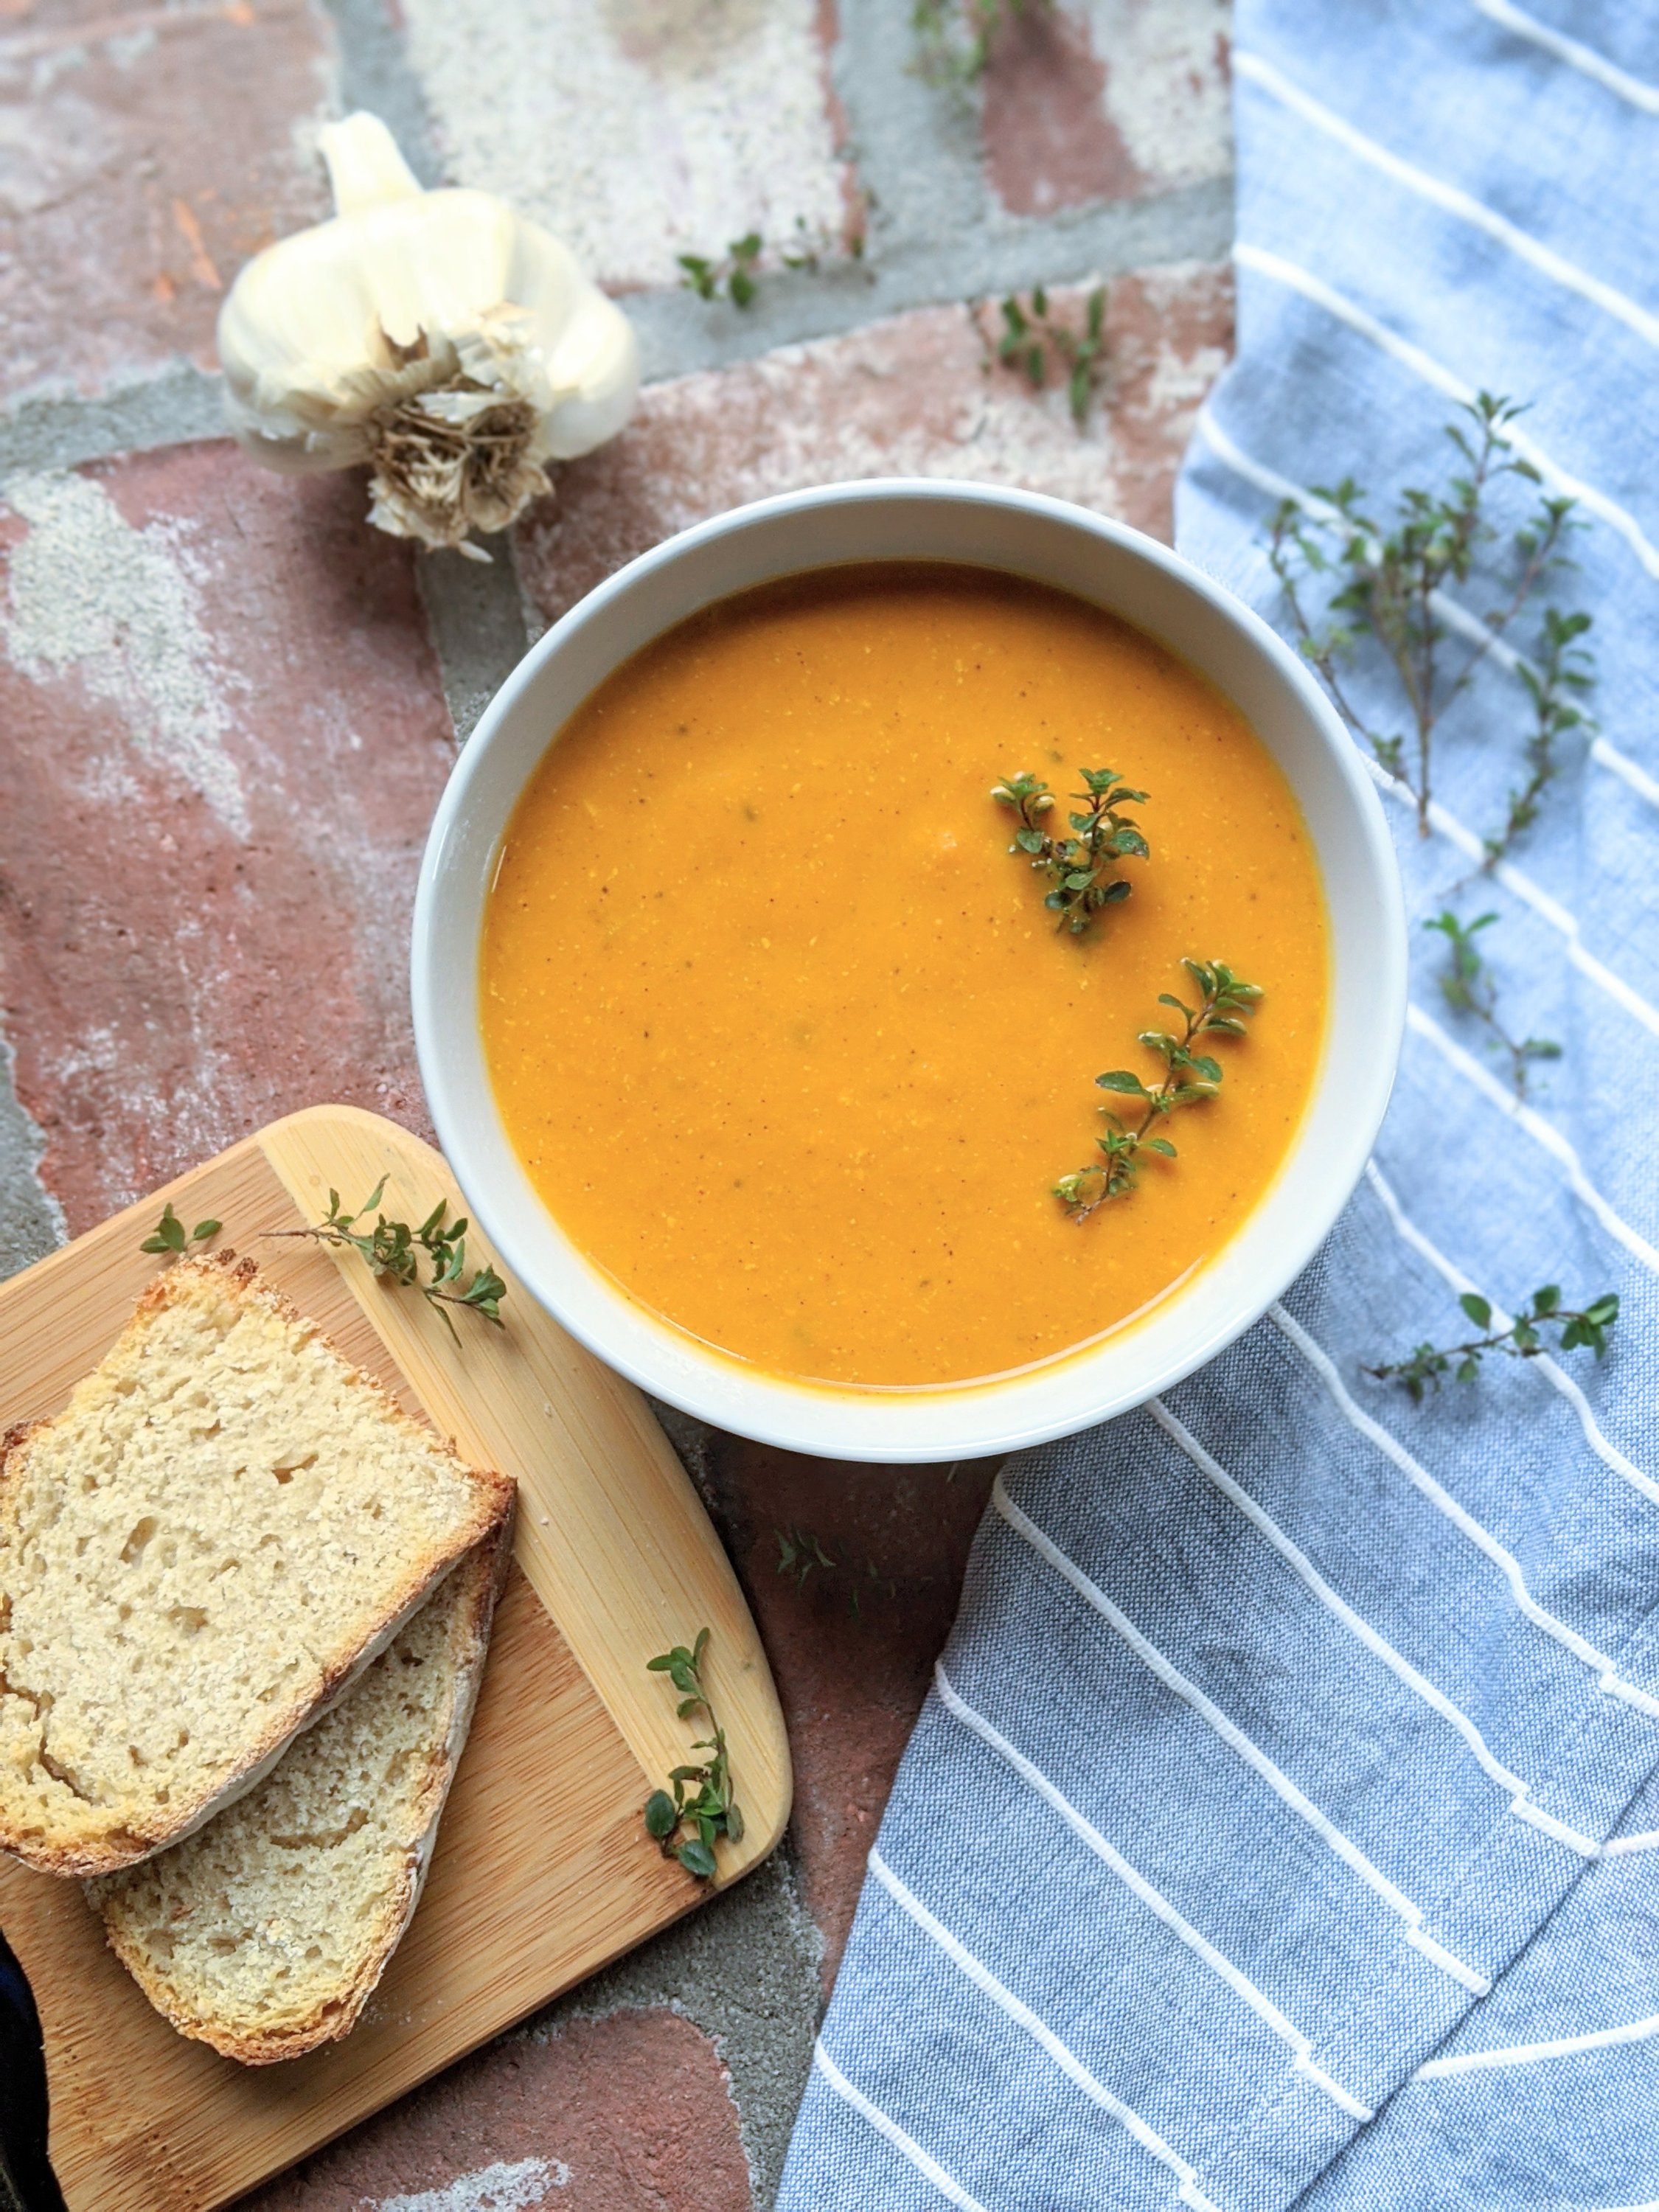 Instant Pot Carrot Ginger Soup Recipe